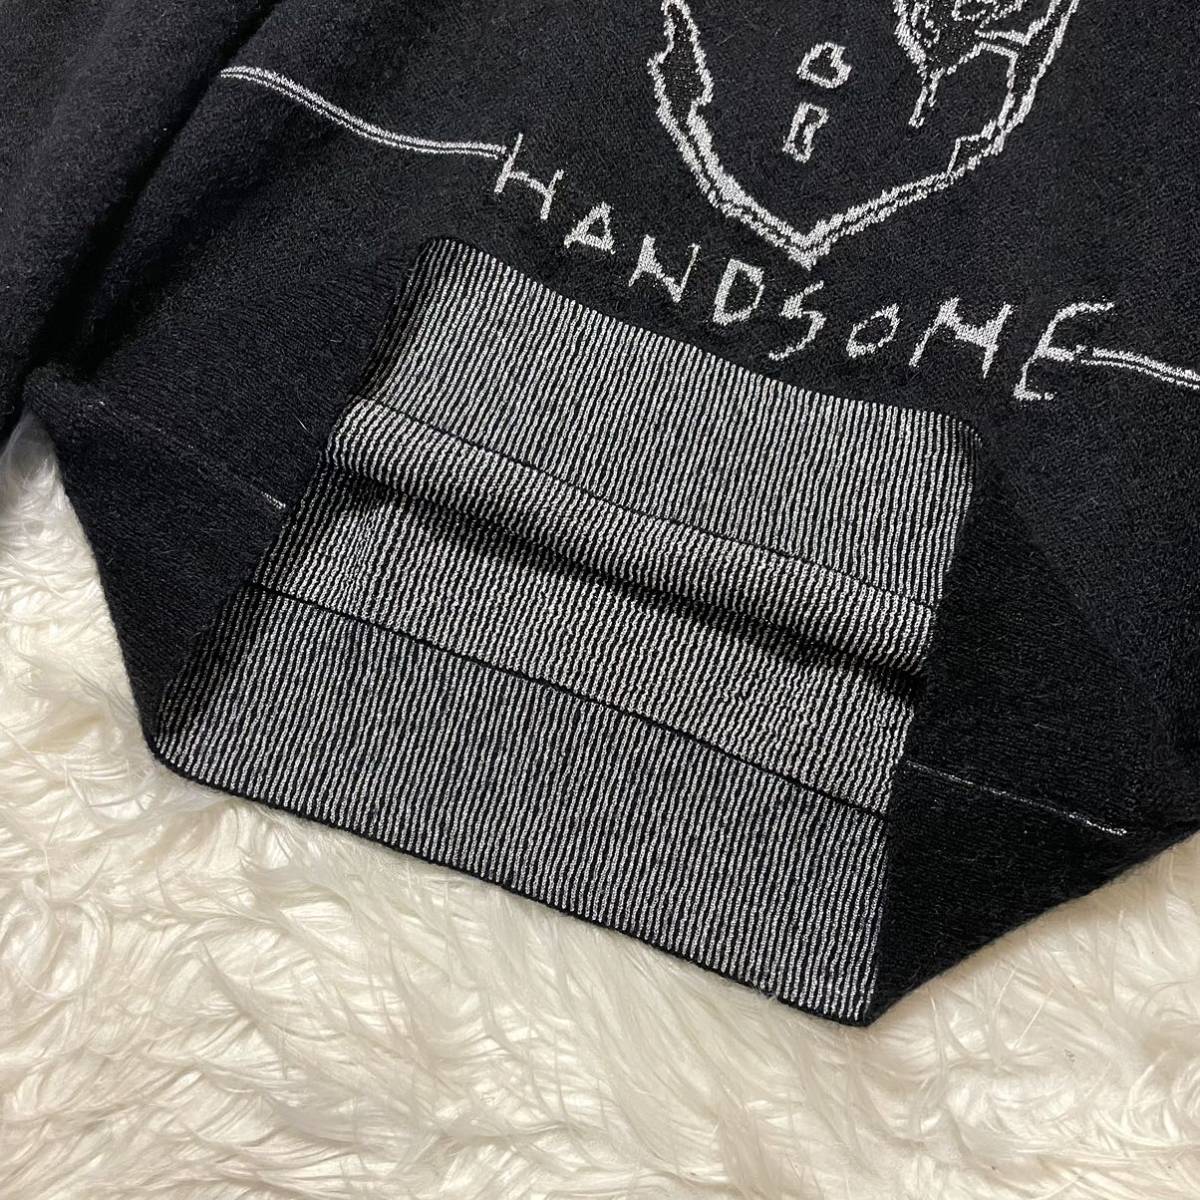  genuine article beautiful goods sun rolan Paris handle Sam design mo hair sweater XS black silver SAINT LANRENT PARIS HANDSOME